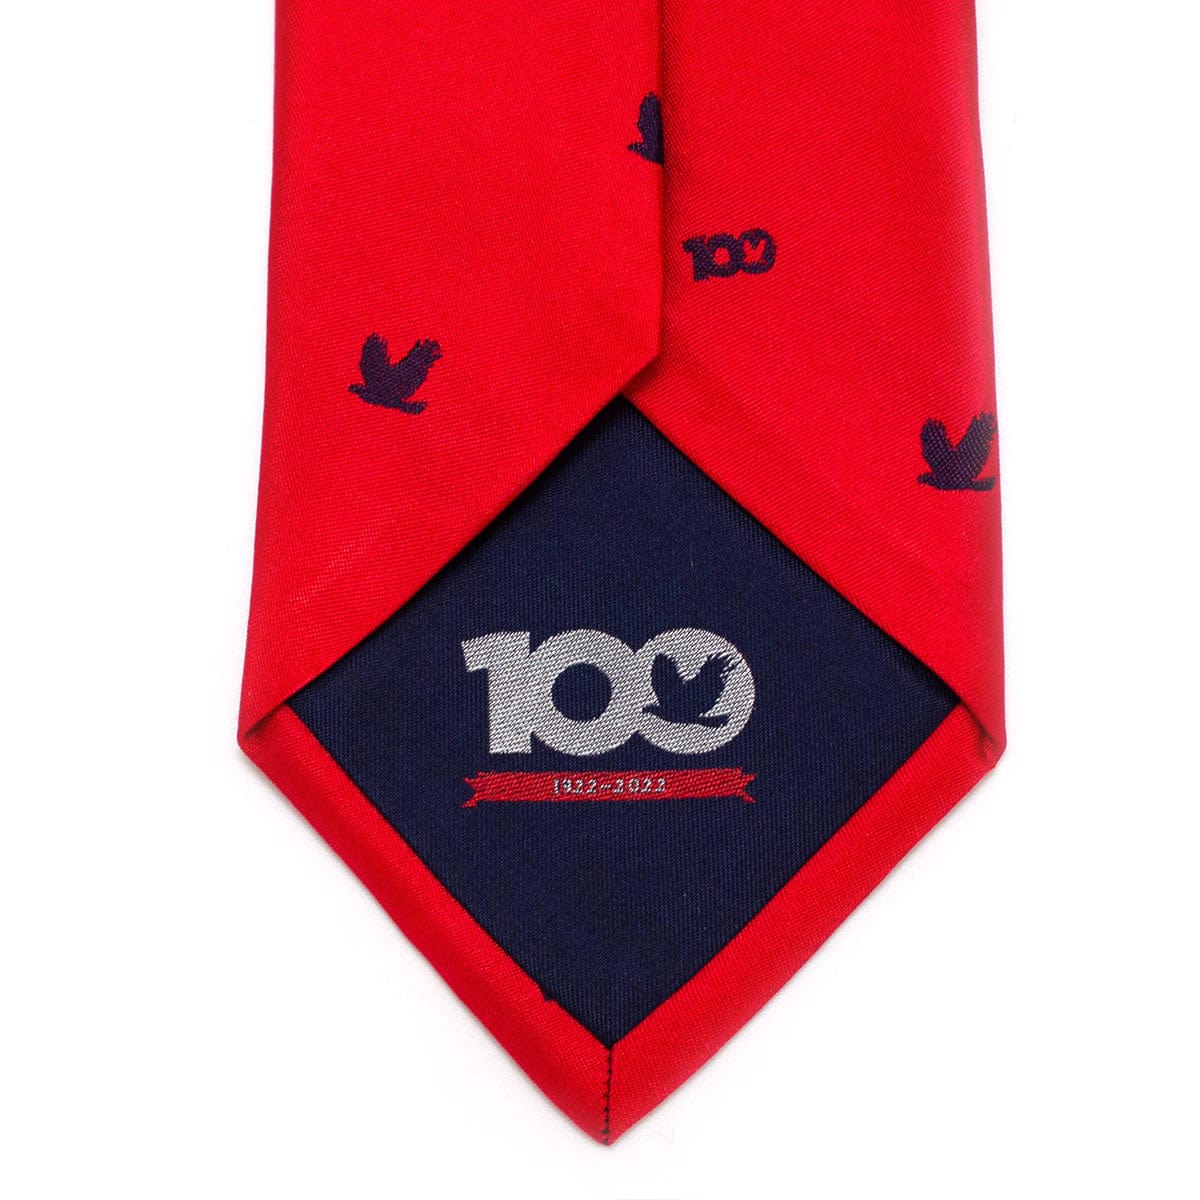 EB Necktie 3" (at widest) x 58" (long) 58" Length/ 3" Width" / Red/ Navy Eaglebrook Commemorative Red Necktie